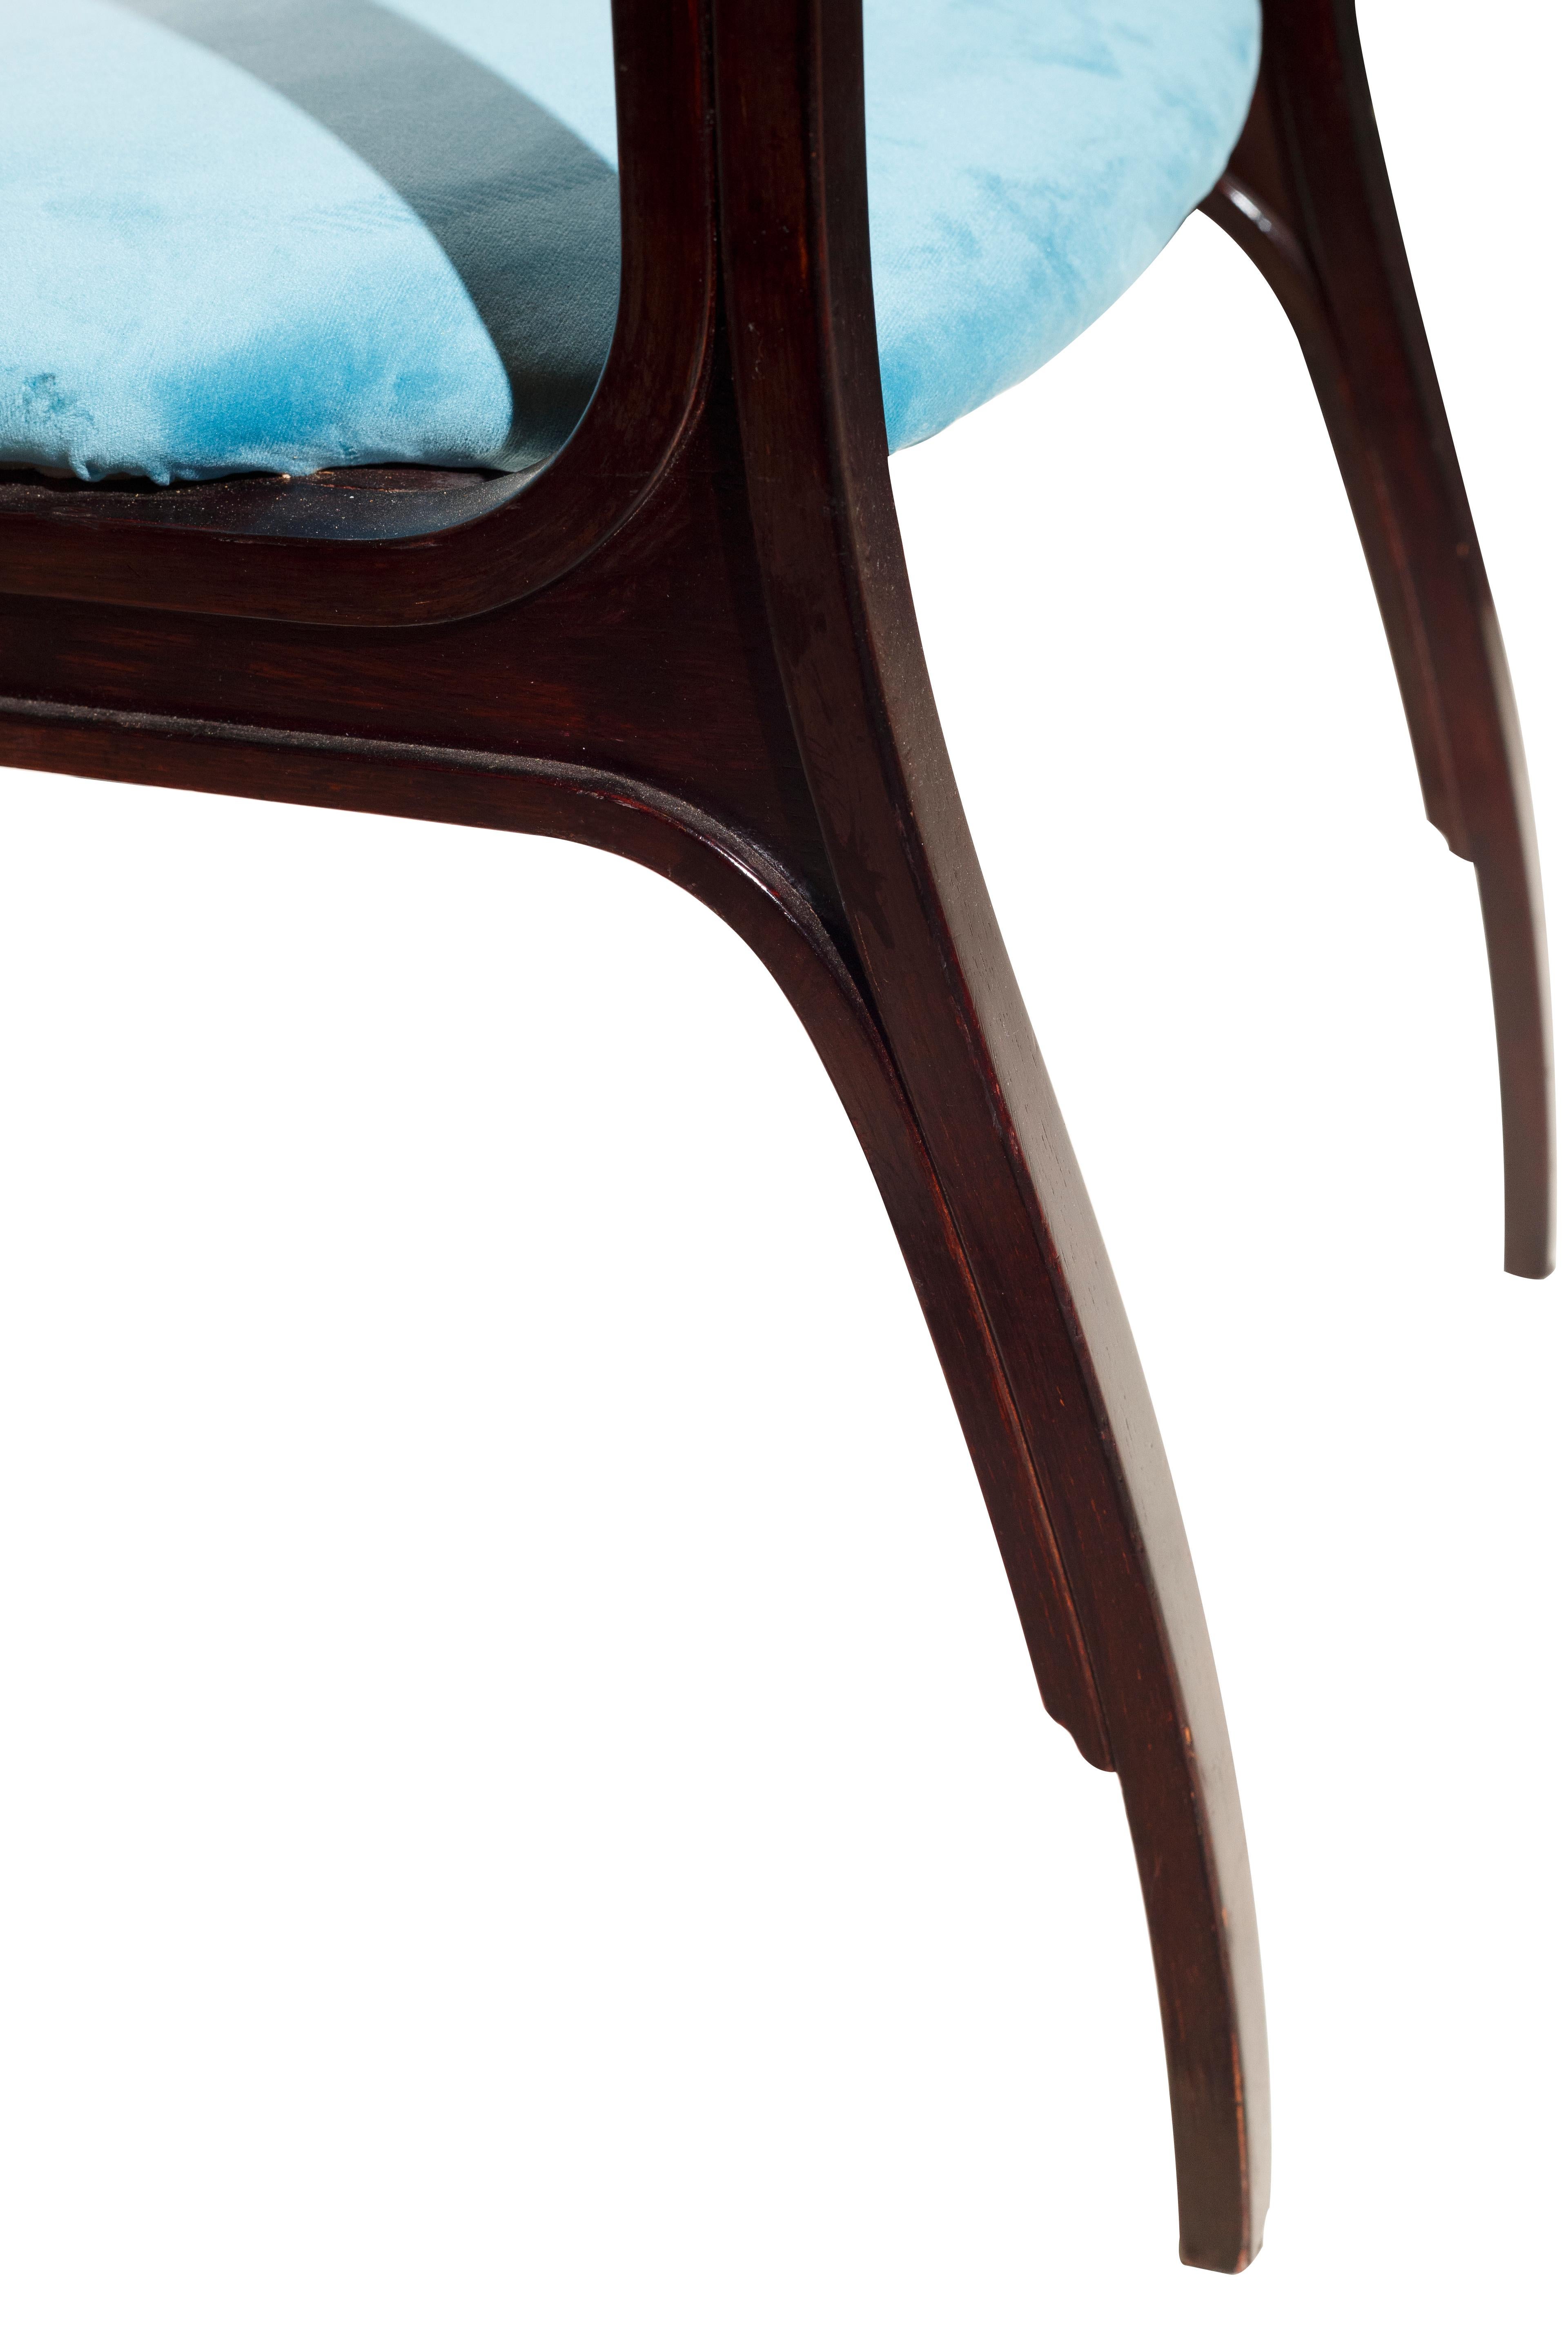 G.F. Frattini 5 sillas de terciopelo azul Modernas de mediados de siglo De Cantieri Carugati mediados del siglo XX en venta